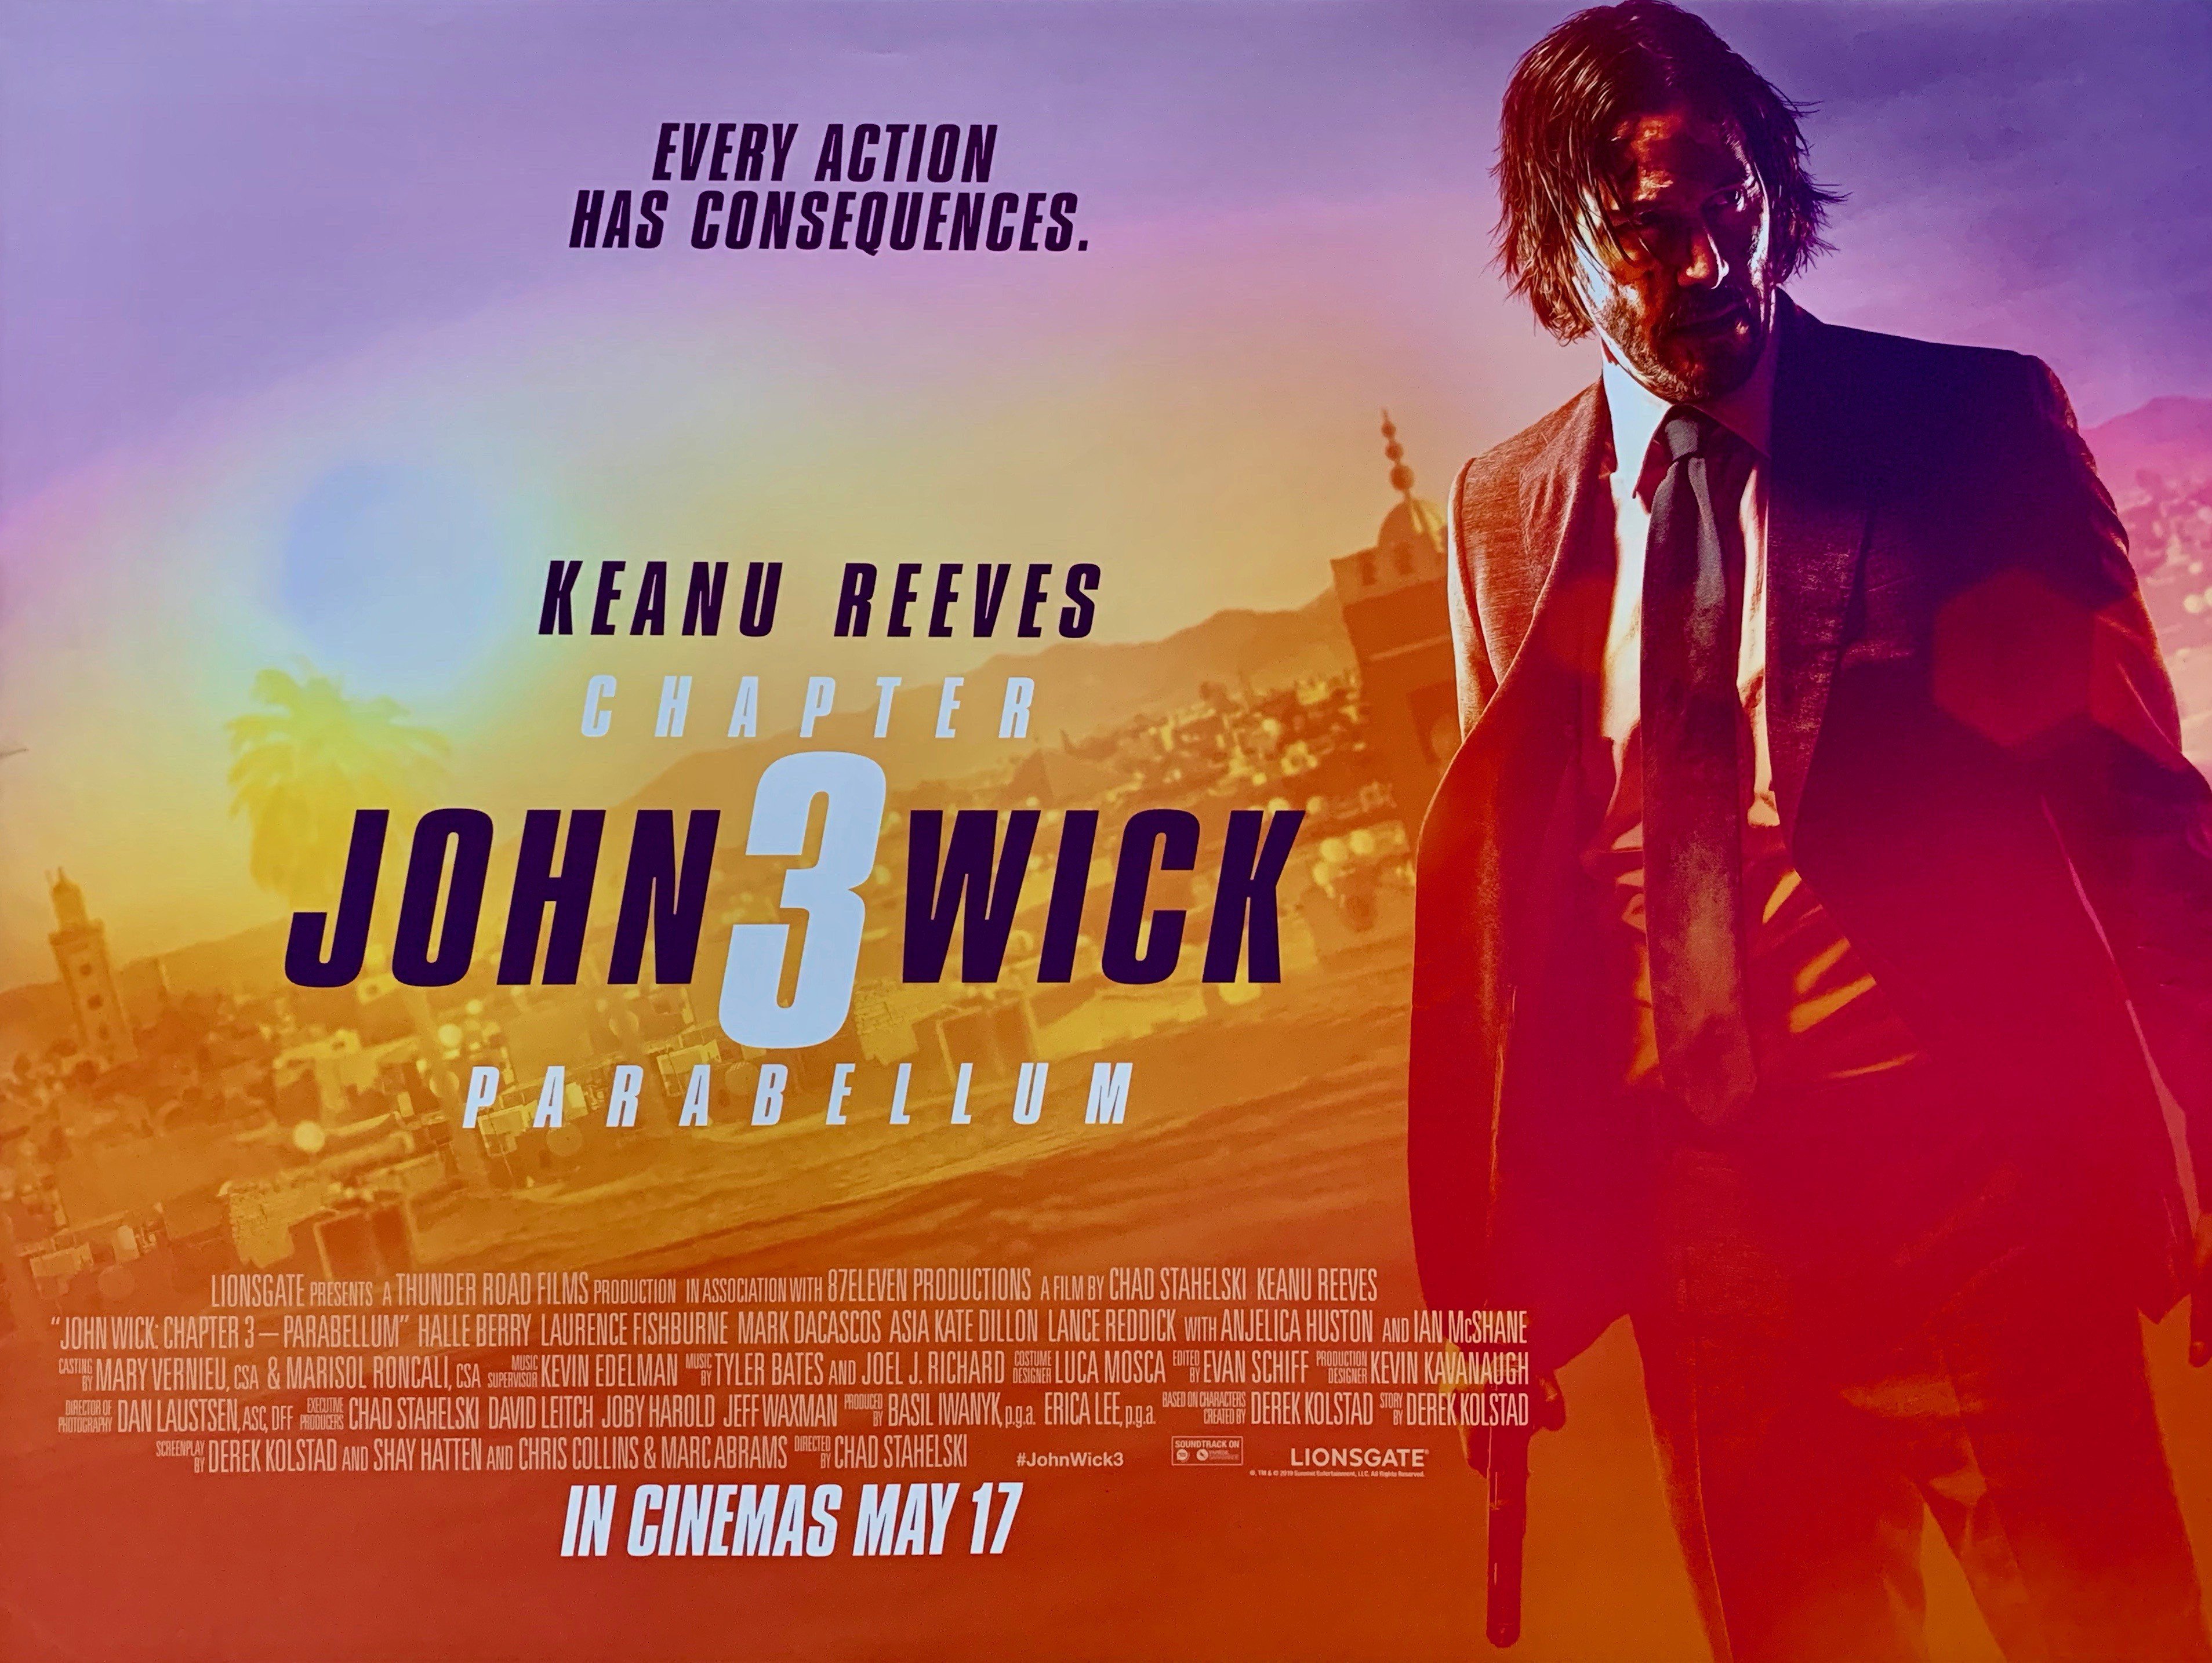 Thrilling John Wick Netflix sequel set for release